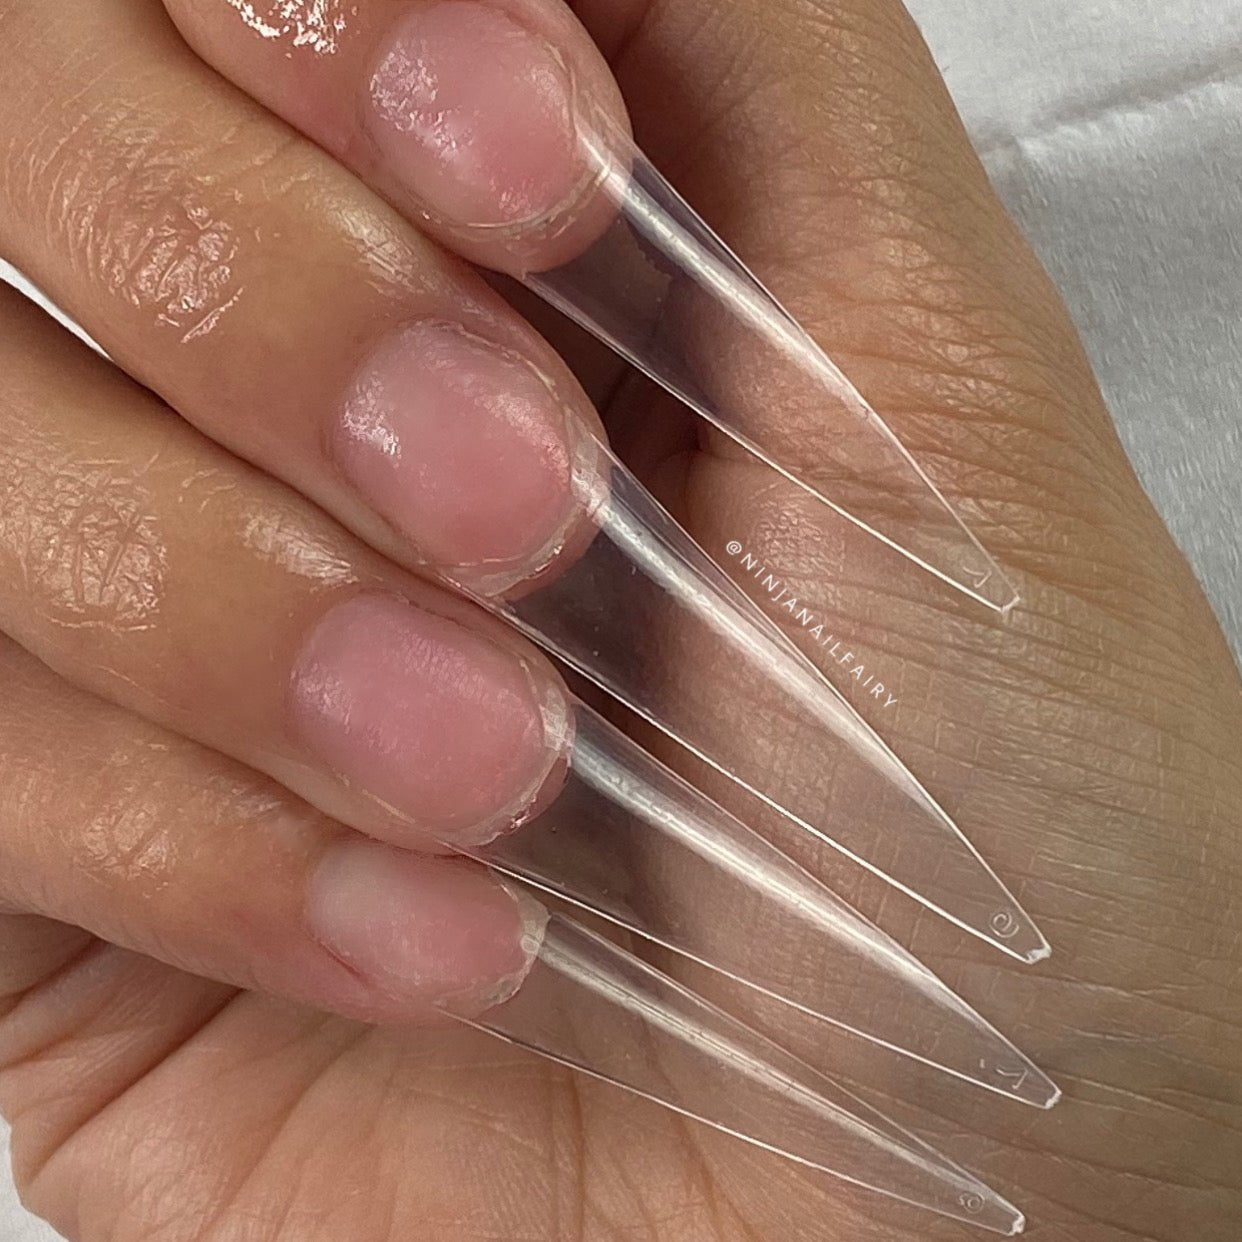 Rosalind Coffin Nails Long Fake Nails - Clear Acrylic Nails Coffin Shaped  Ballerina Nails Tips Full Cover False Nail Artificial Nails with Case for  Nail Salons and DIY Nail Art, 10 Sizes – ROSALIND